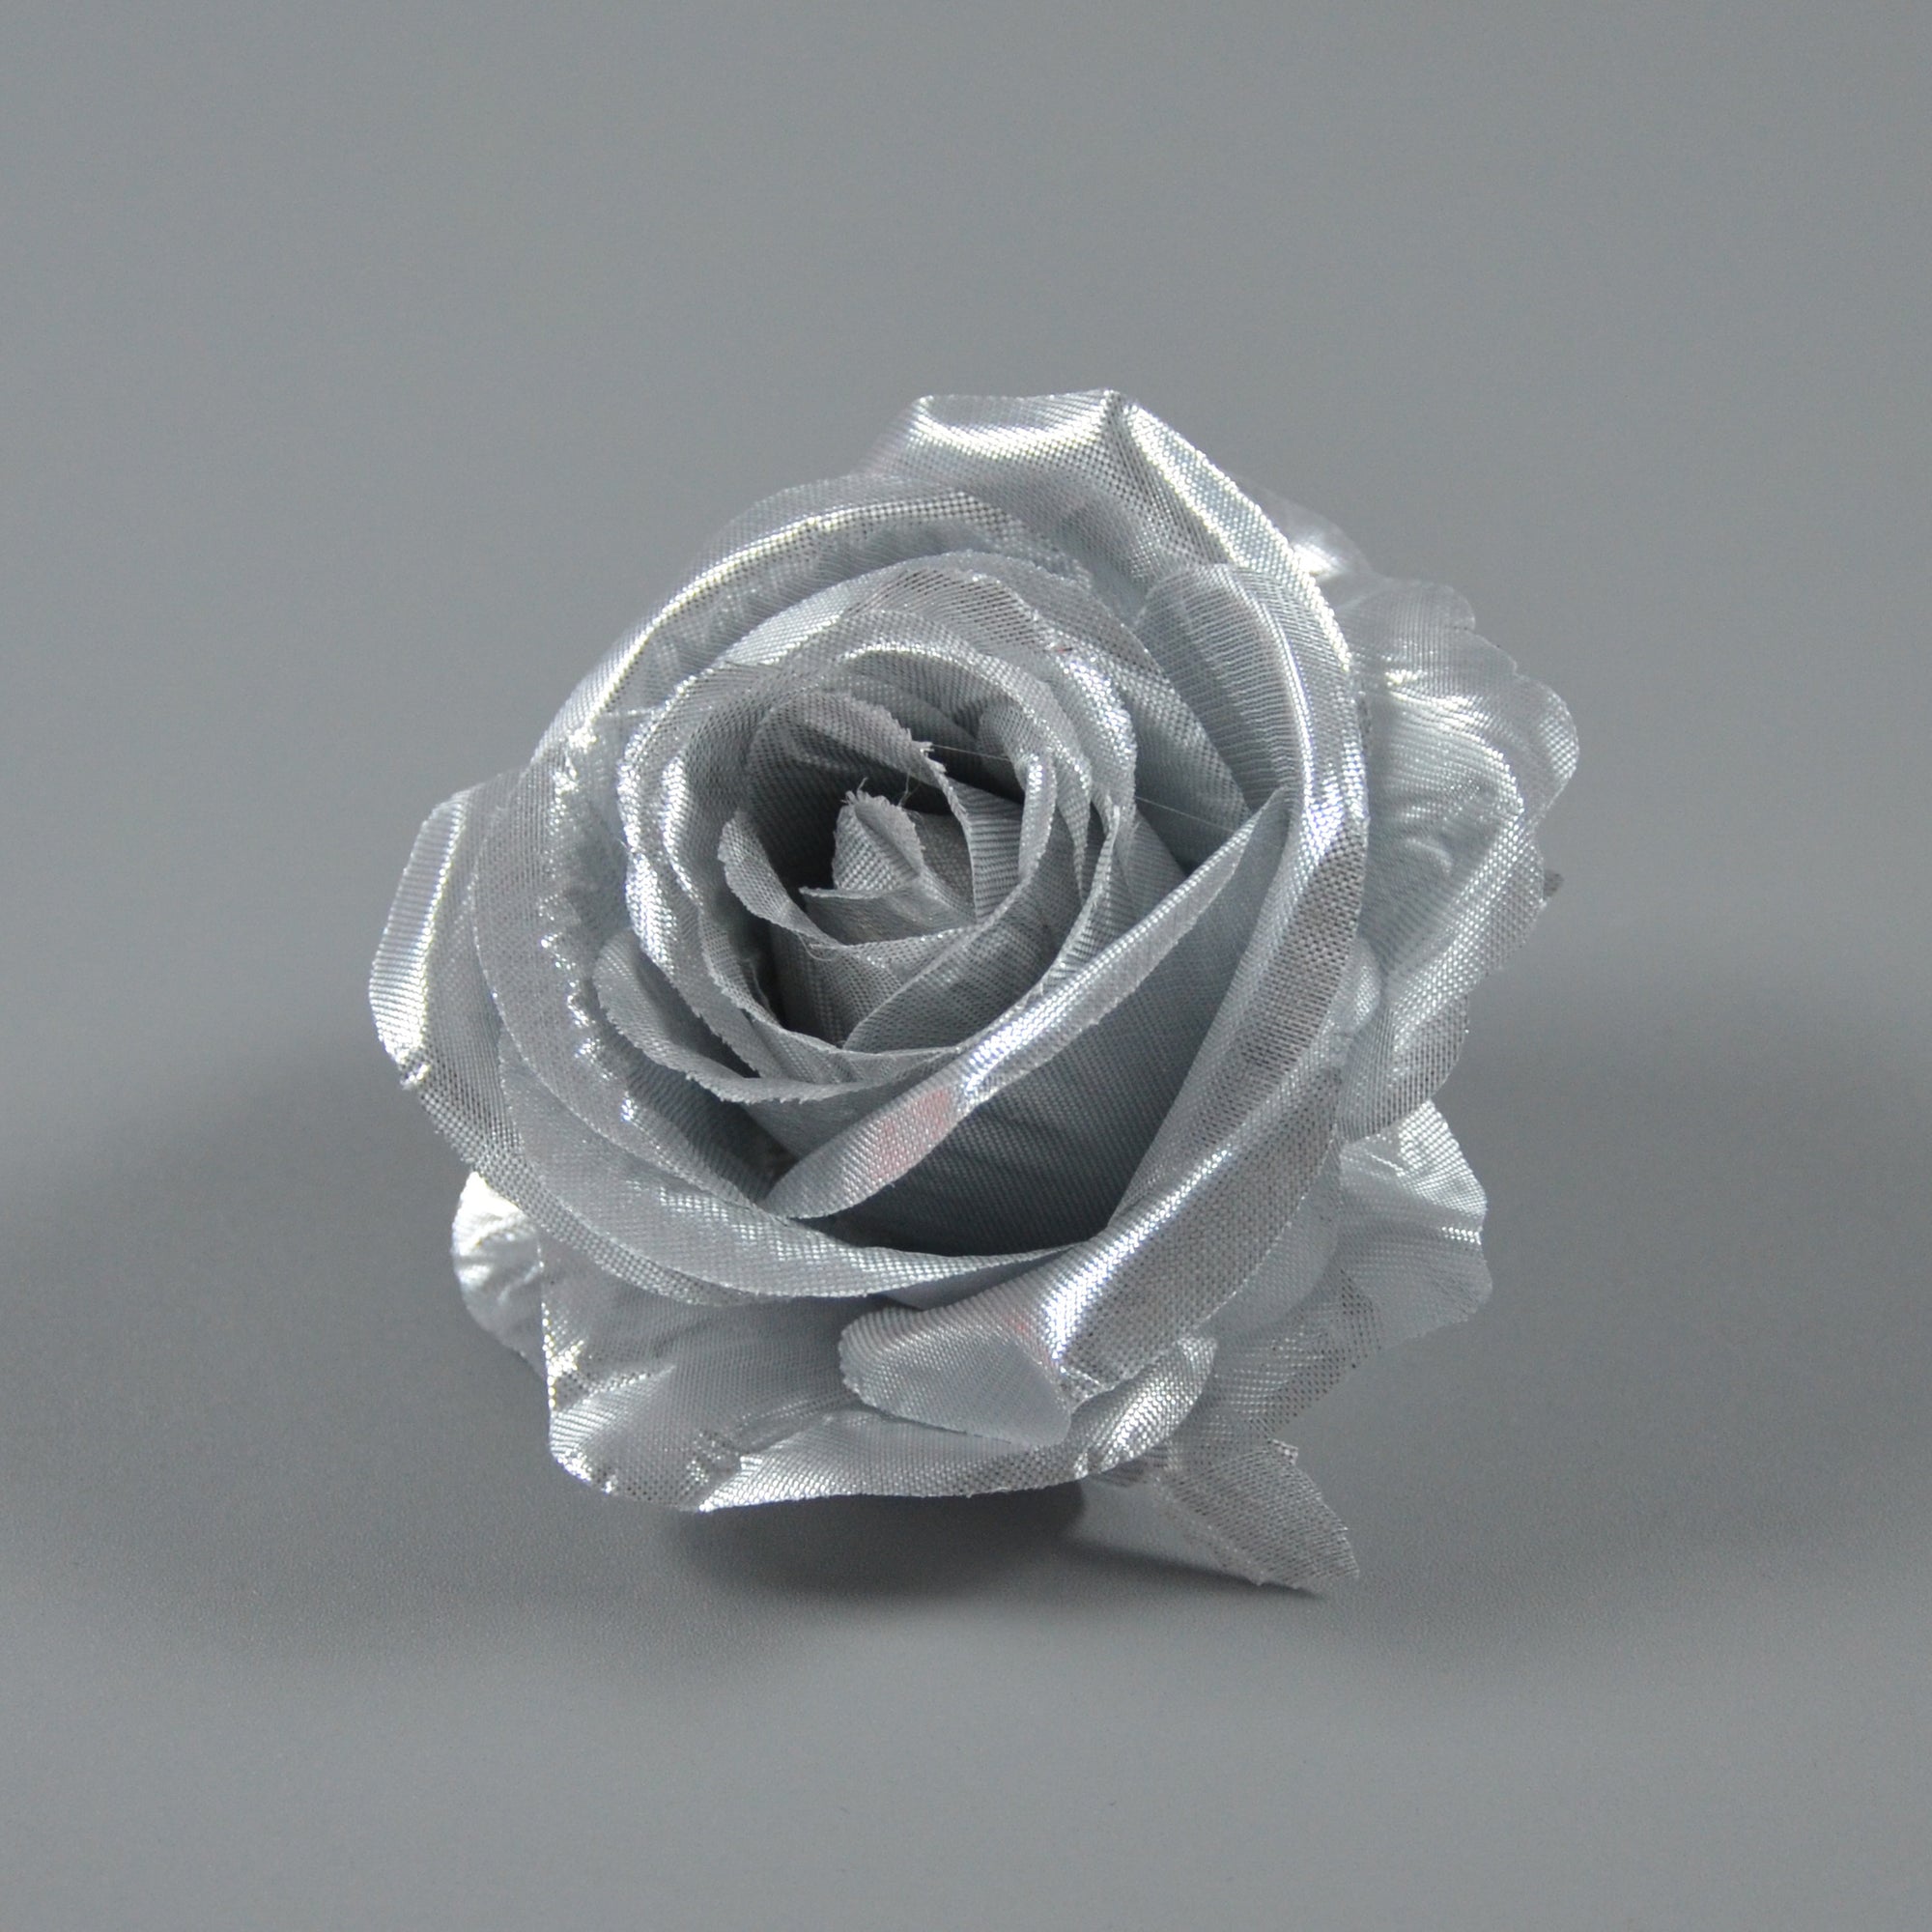 Silk Roses in Bulk Artificial Flower Heads